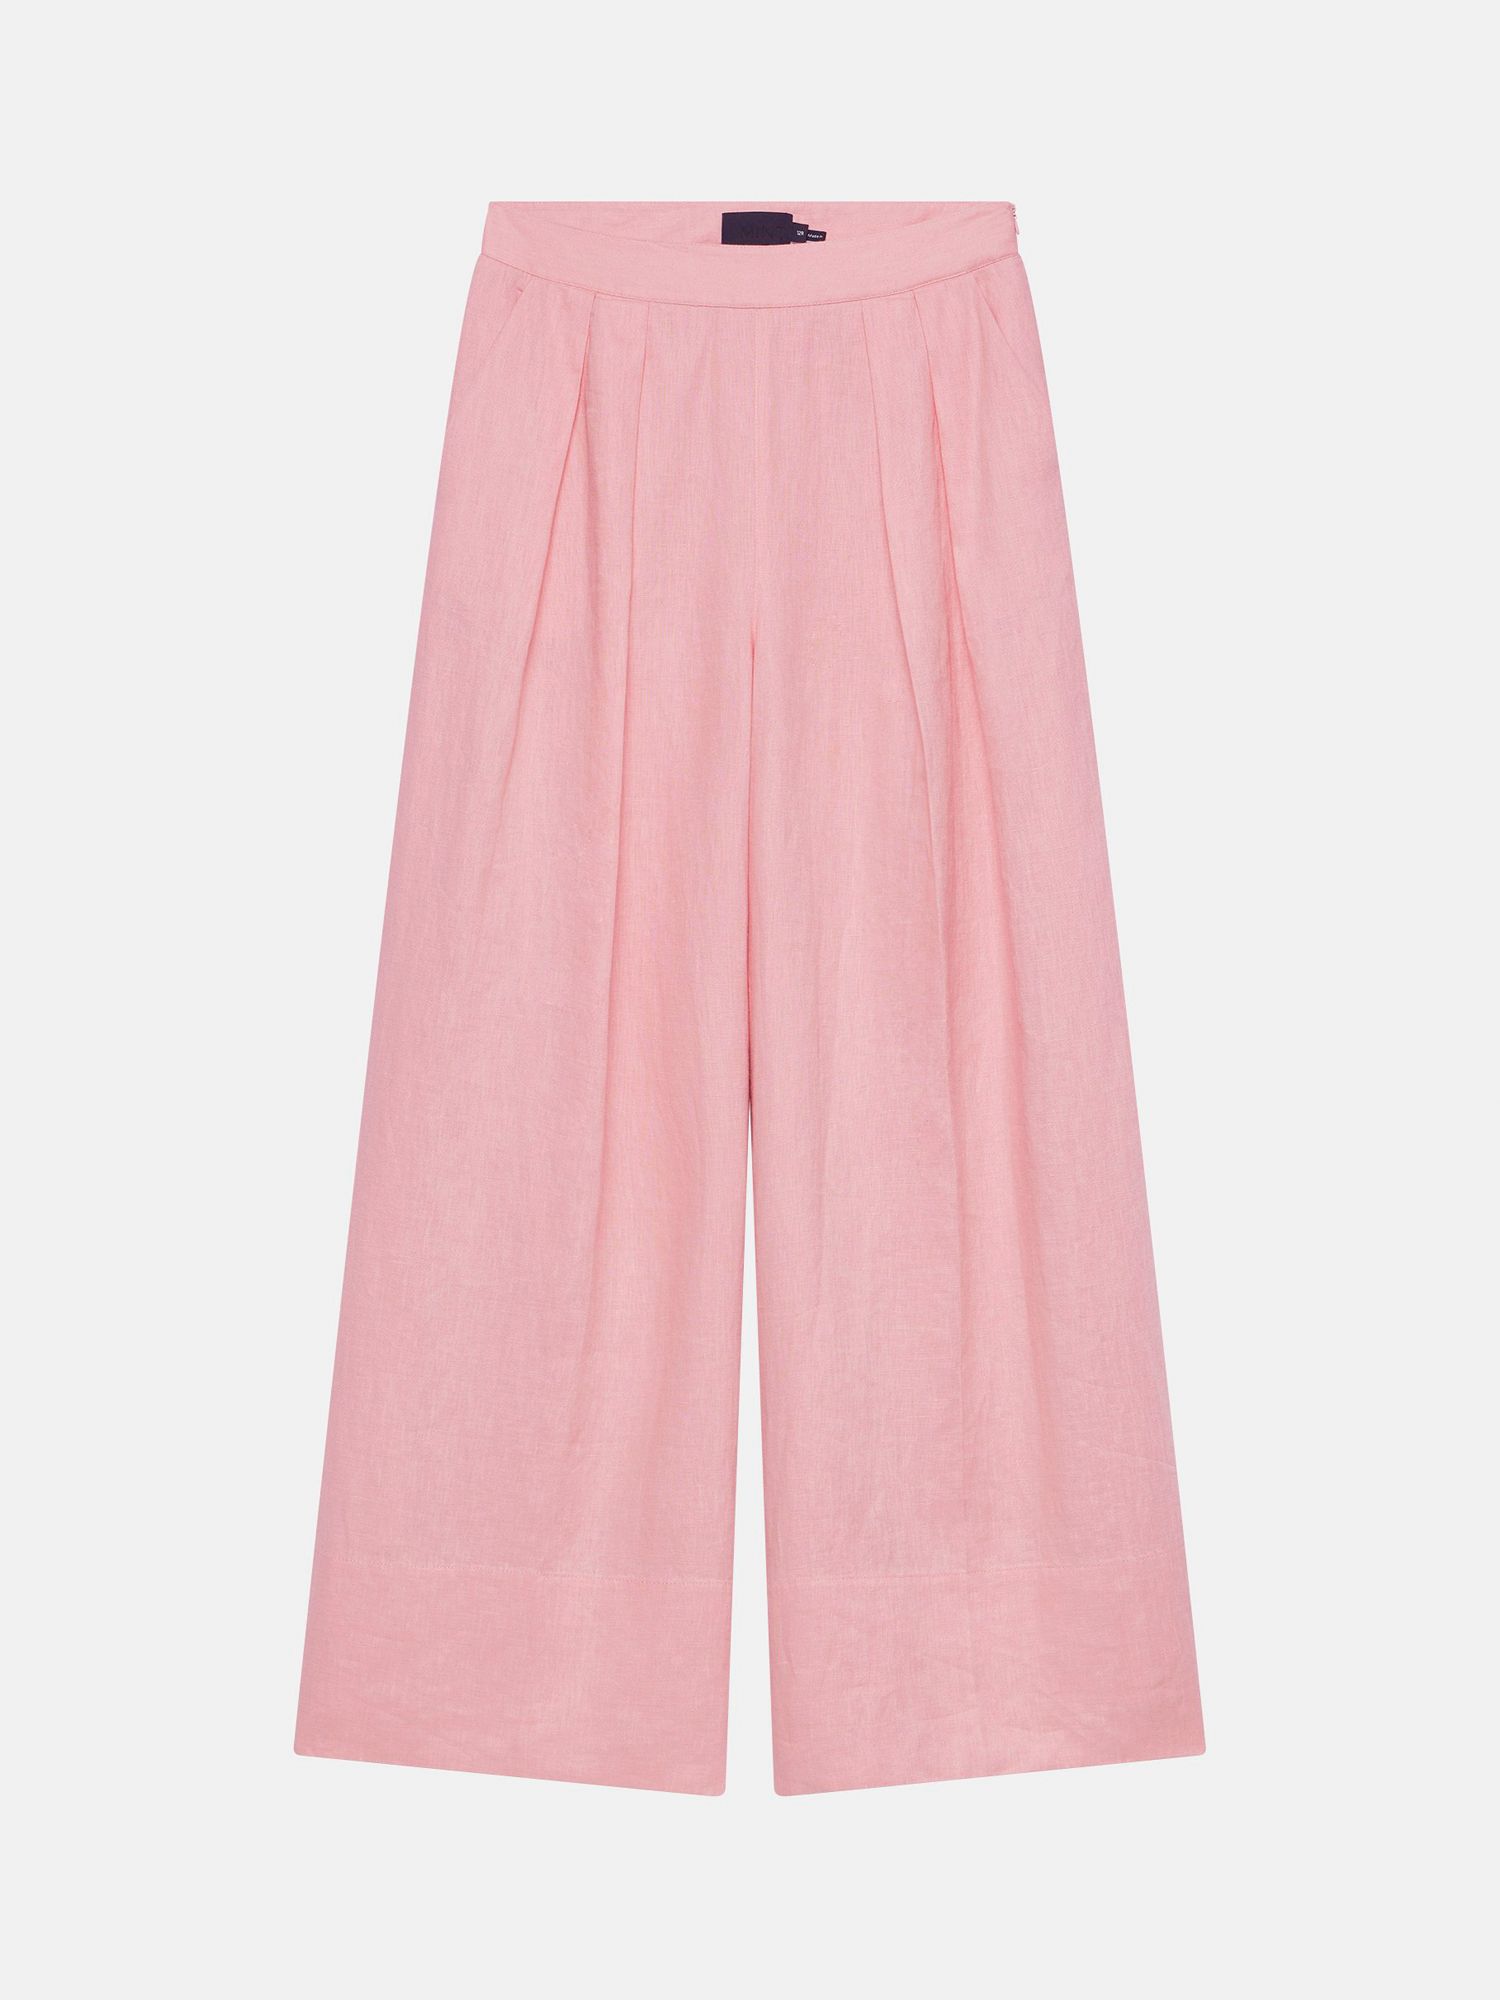 Mint Velvet Linen Wide Leg Trousers, Pink, 6R